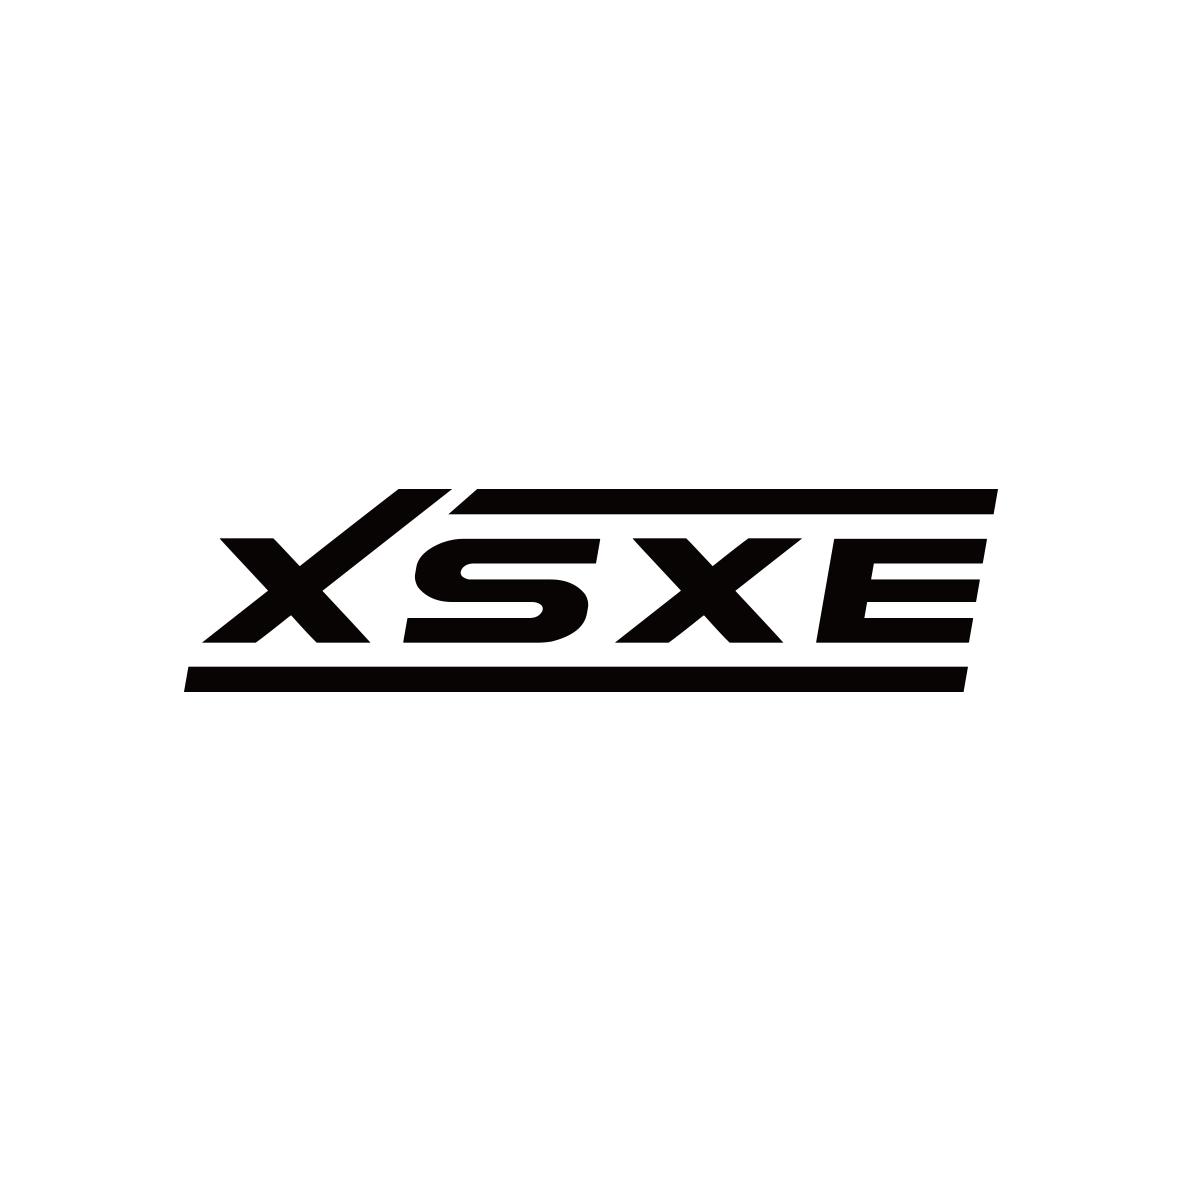 XSXE